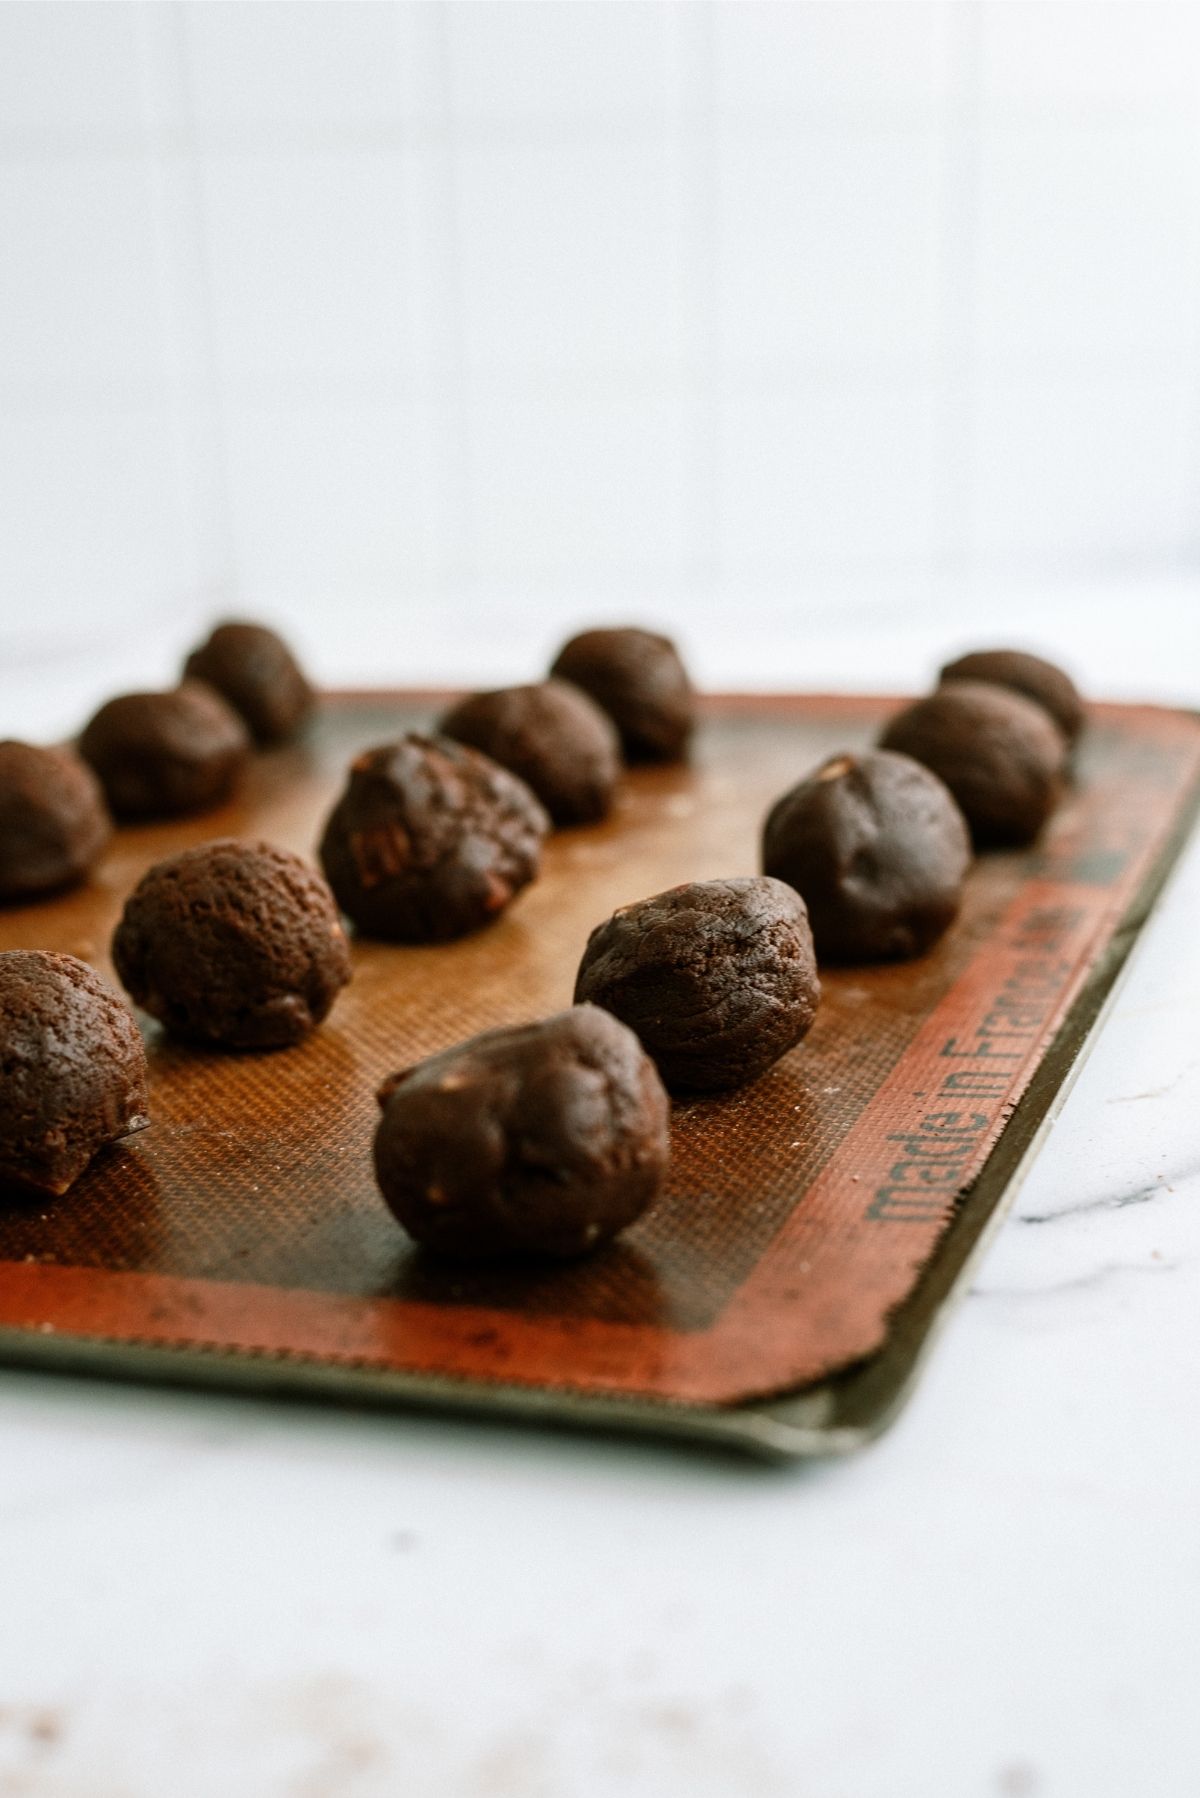 Salted Caramel Chocolate Cookie dough balls on a baking sheet